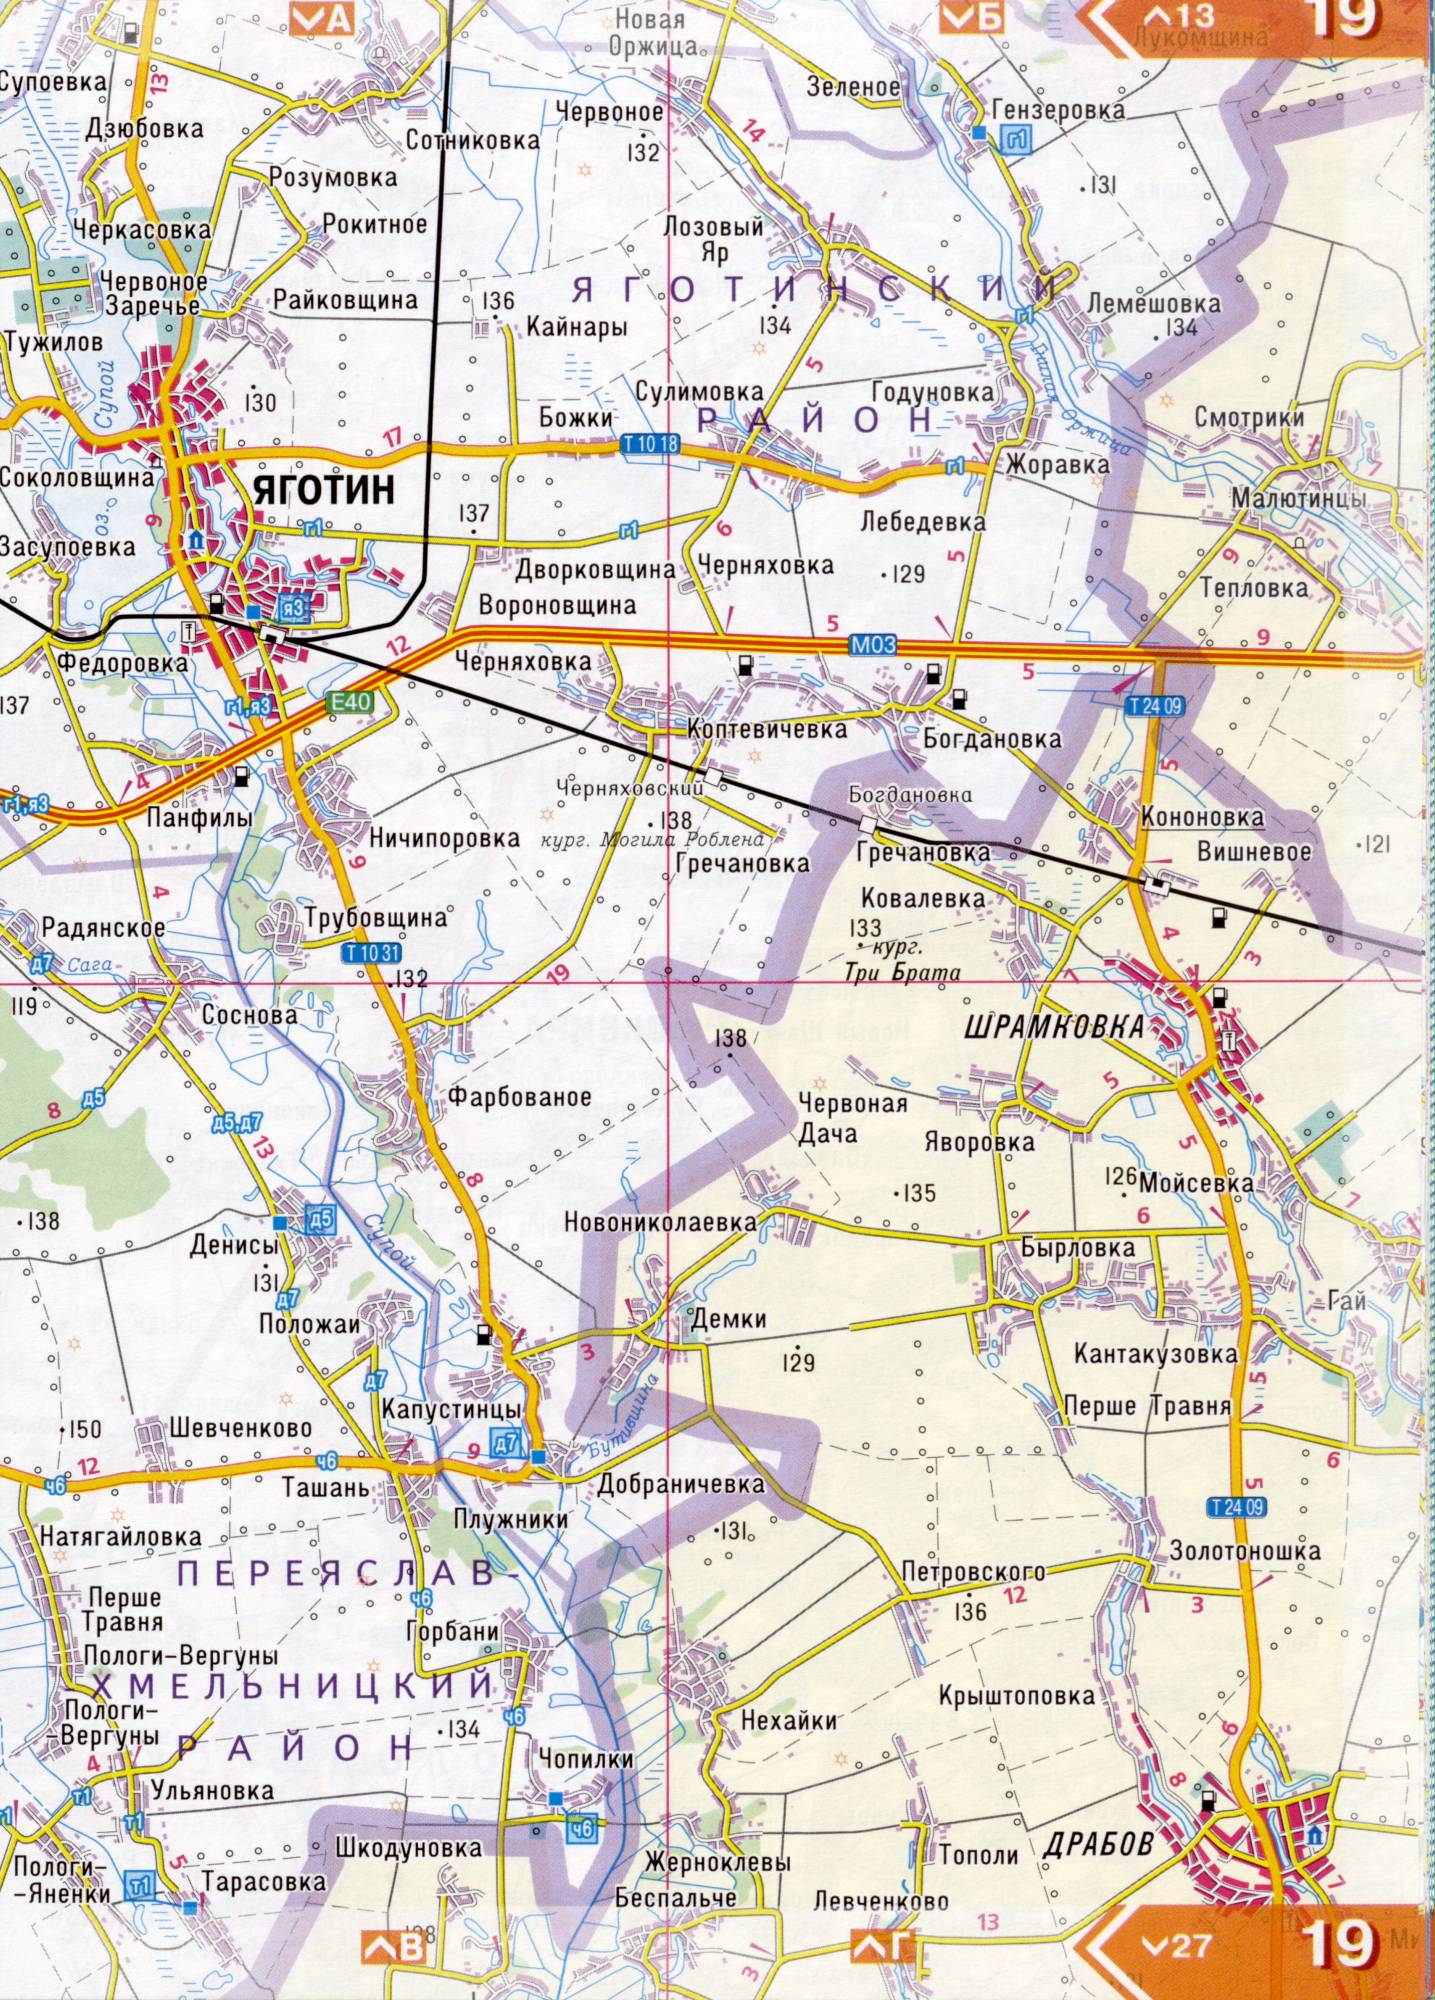 Atlas de la région de Kiev. Une carte détaillée de la région de Kiev de l'atlas des routes. région de Kiev sur une carte détaillée de 1cm échelle = 3 km. Gratuit, F3 - Yahotyn